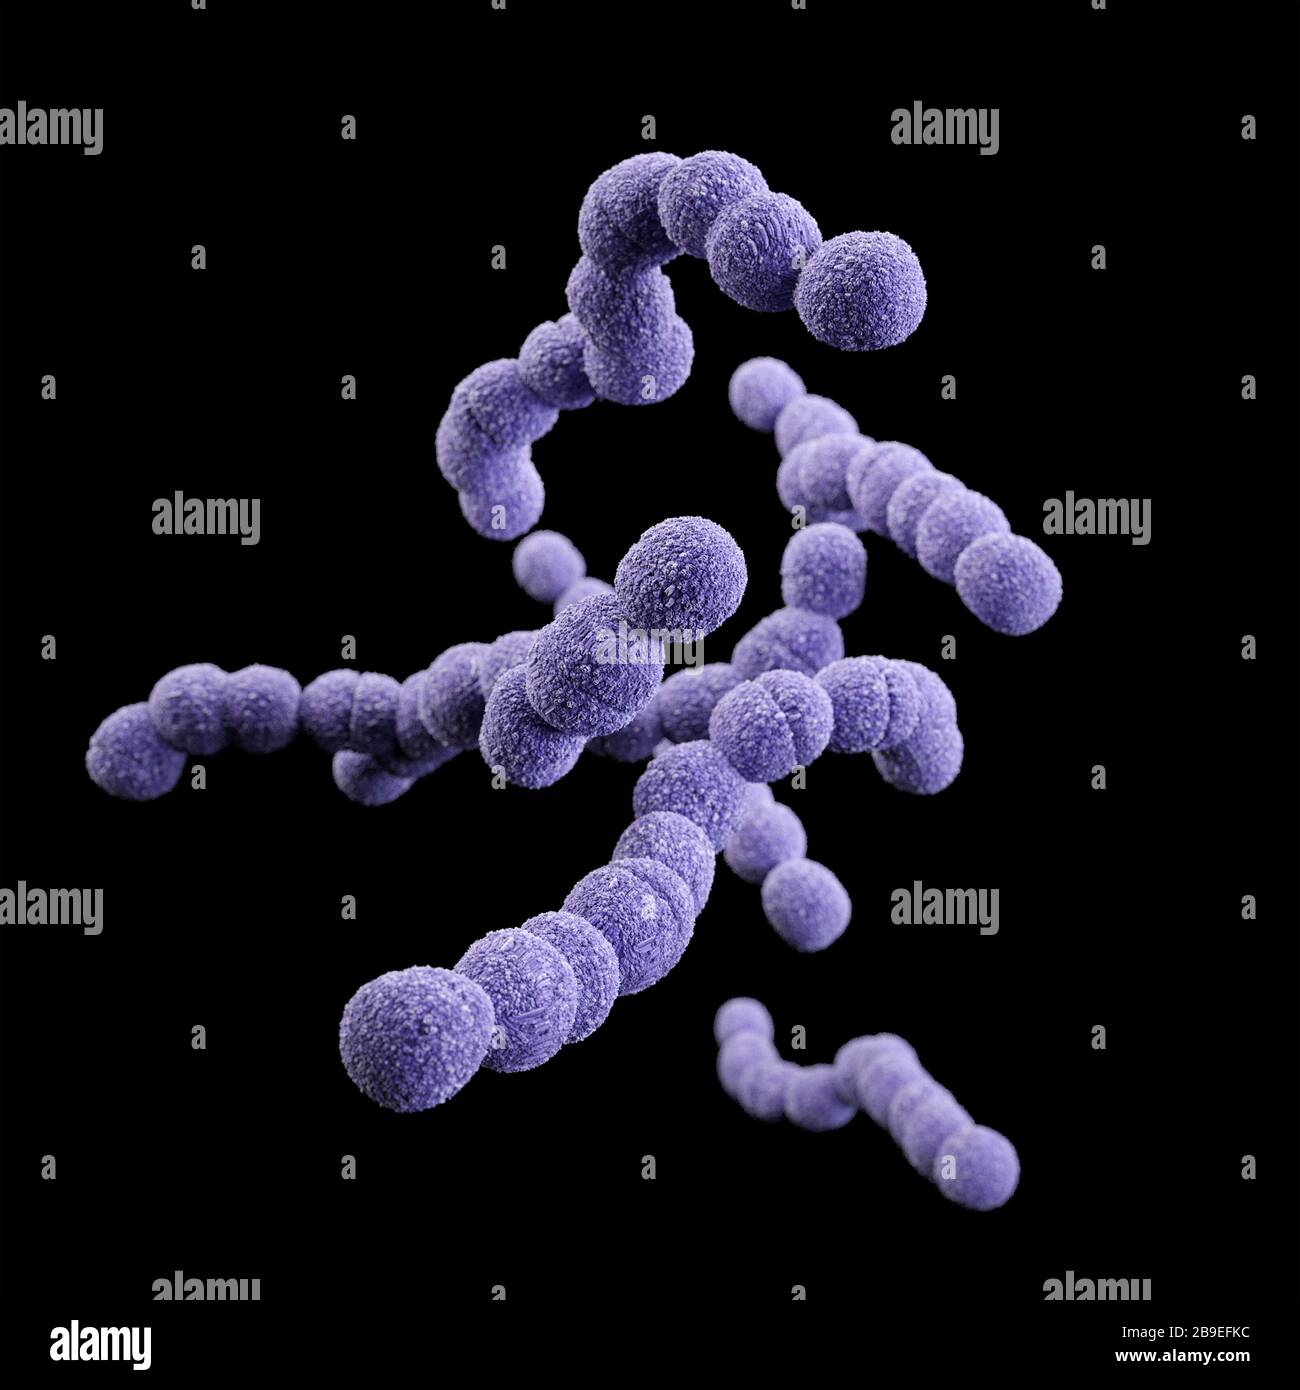 3D illustration of the Streptococcus agalactiae bacteria. Stock Photo